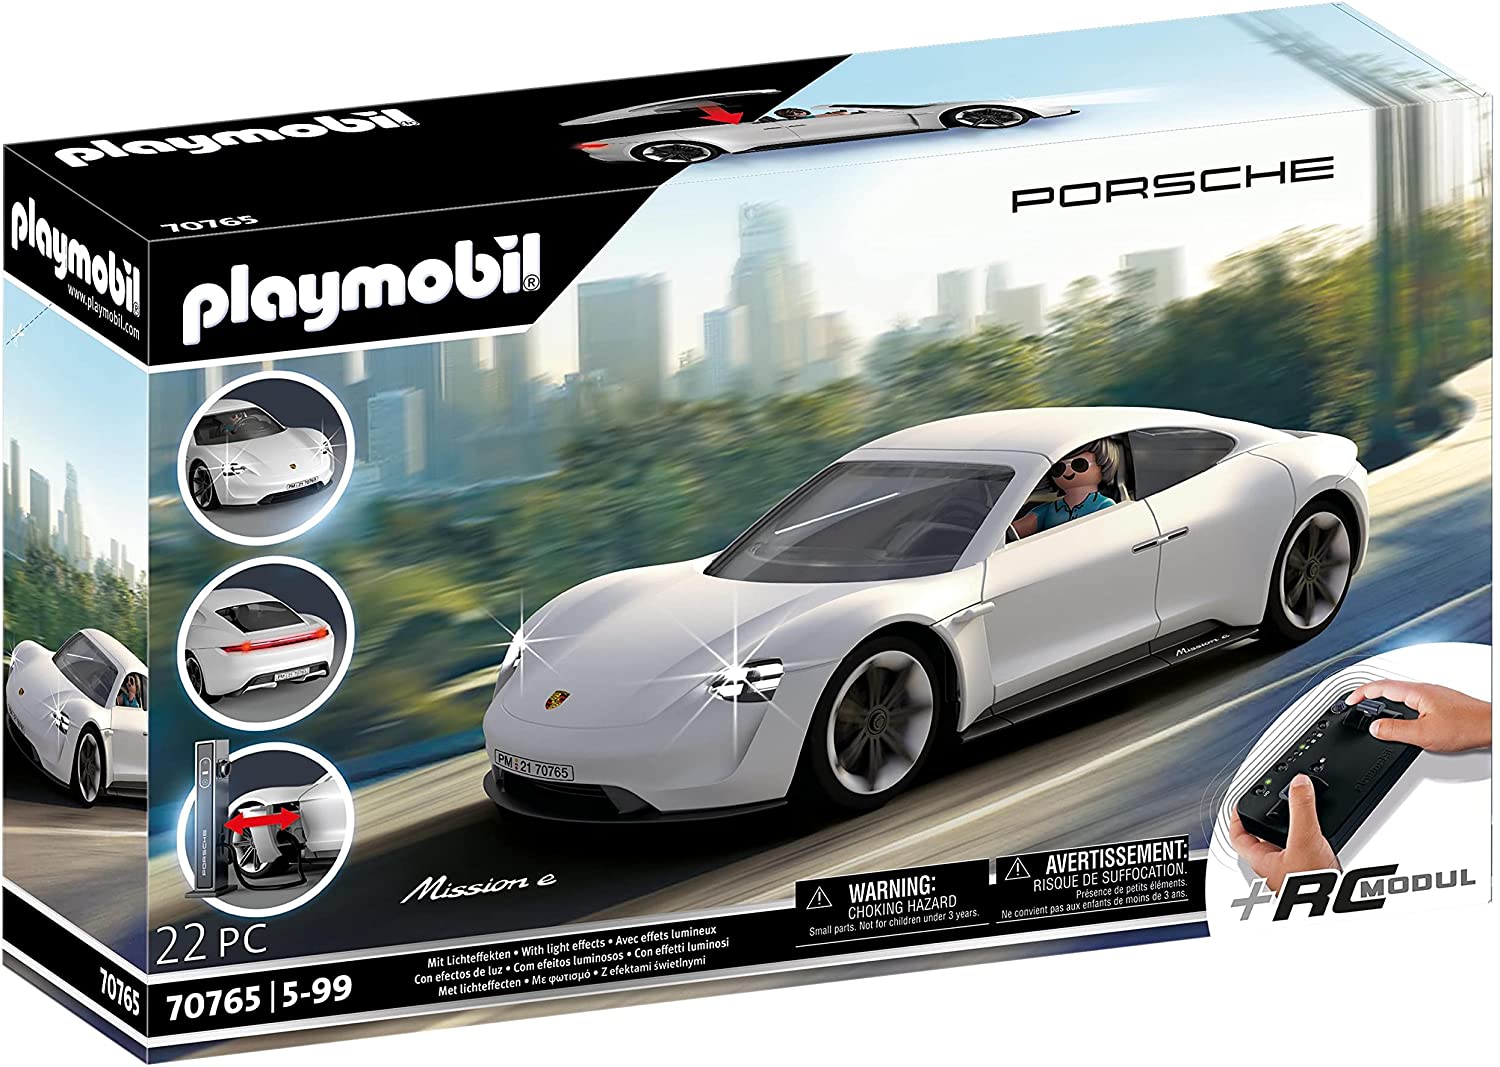 Playmobil Porsche Car